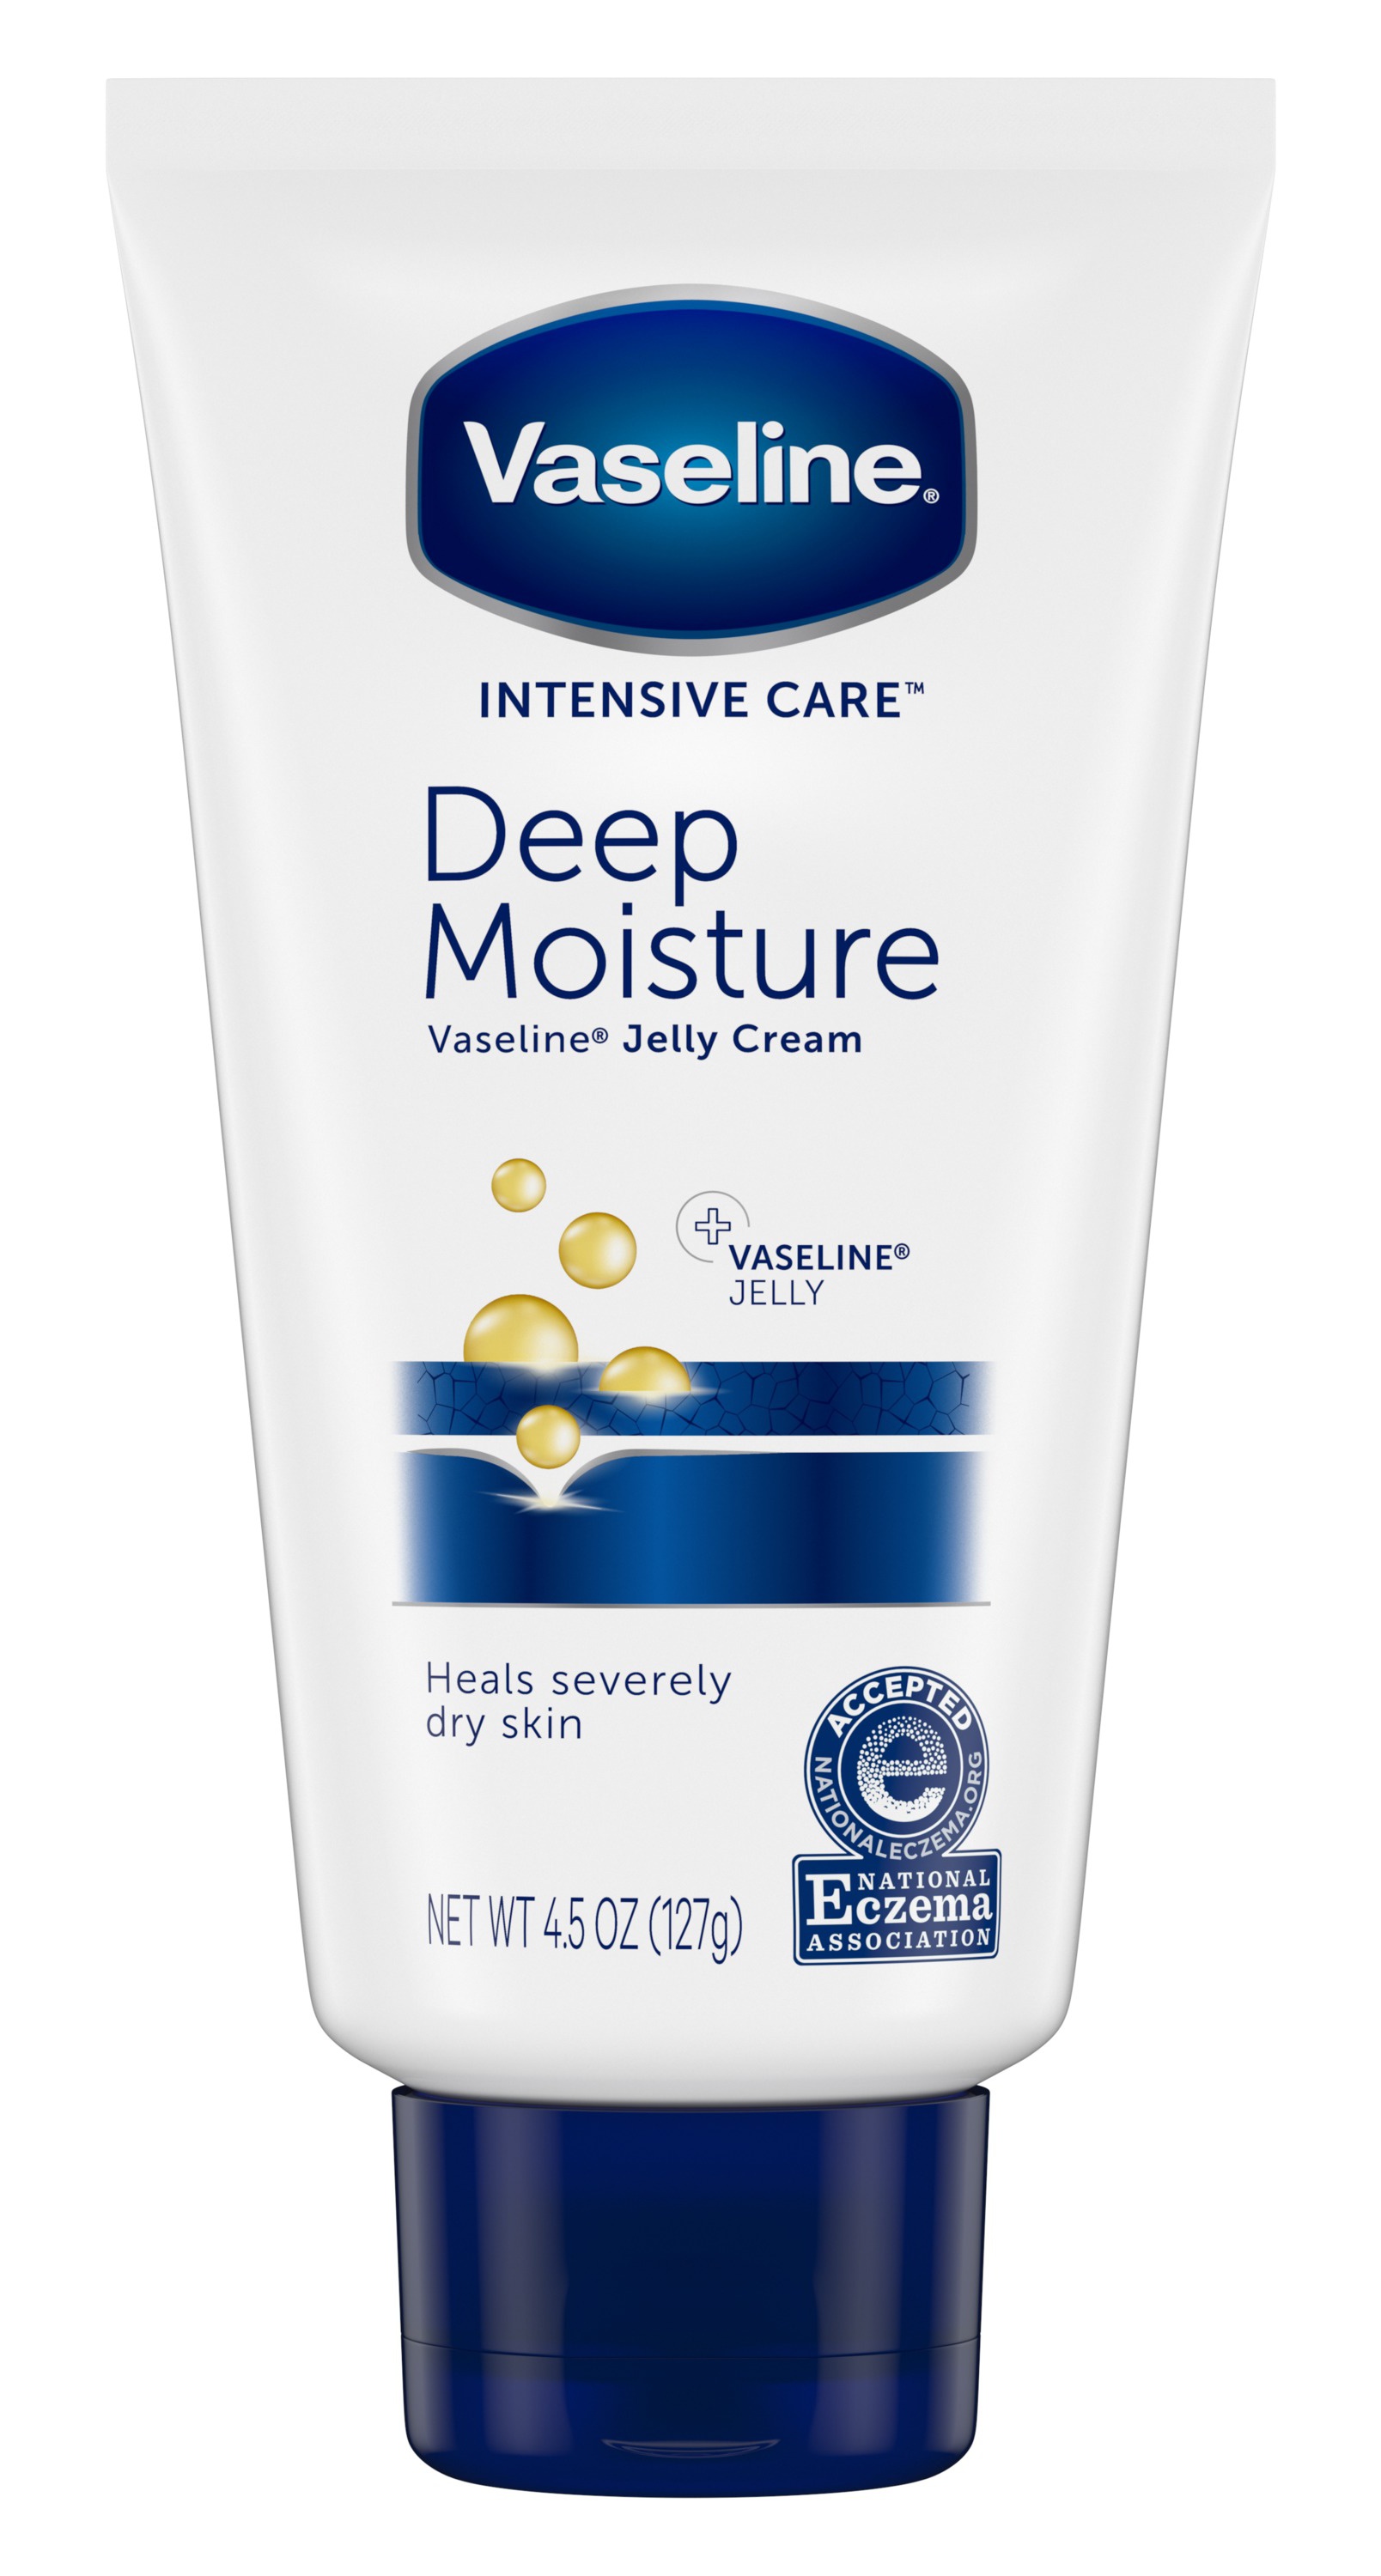 Vaseline Deep Moisture Vitamin E Petroleum Jelly Cream